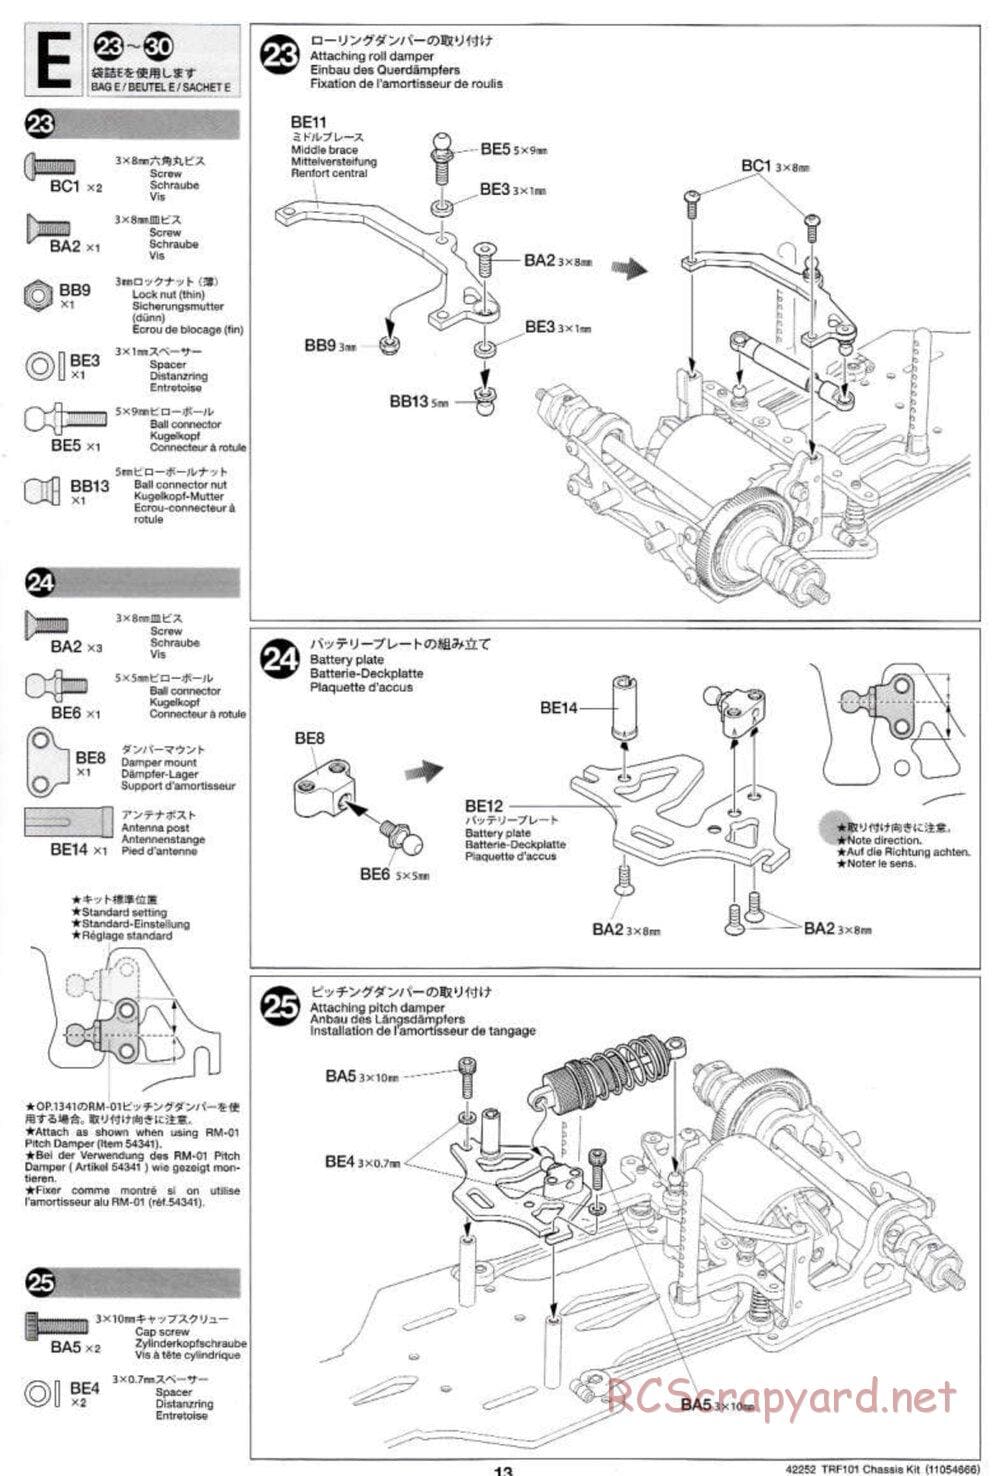 Tamiya - TRF101 Chassis - Manual - Page 13